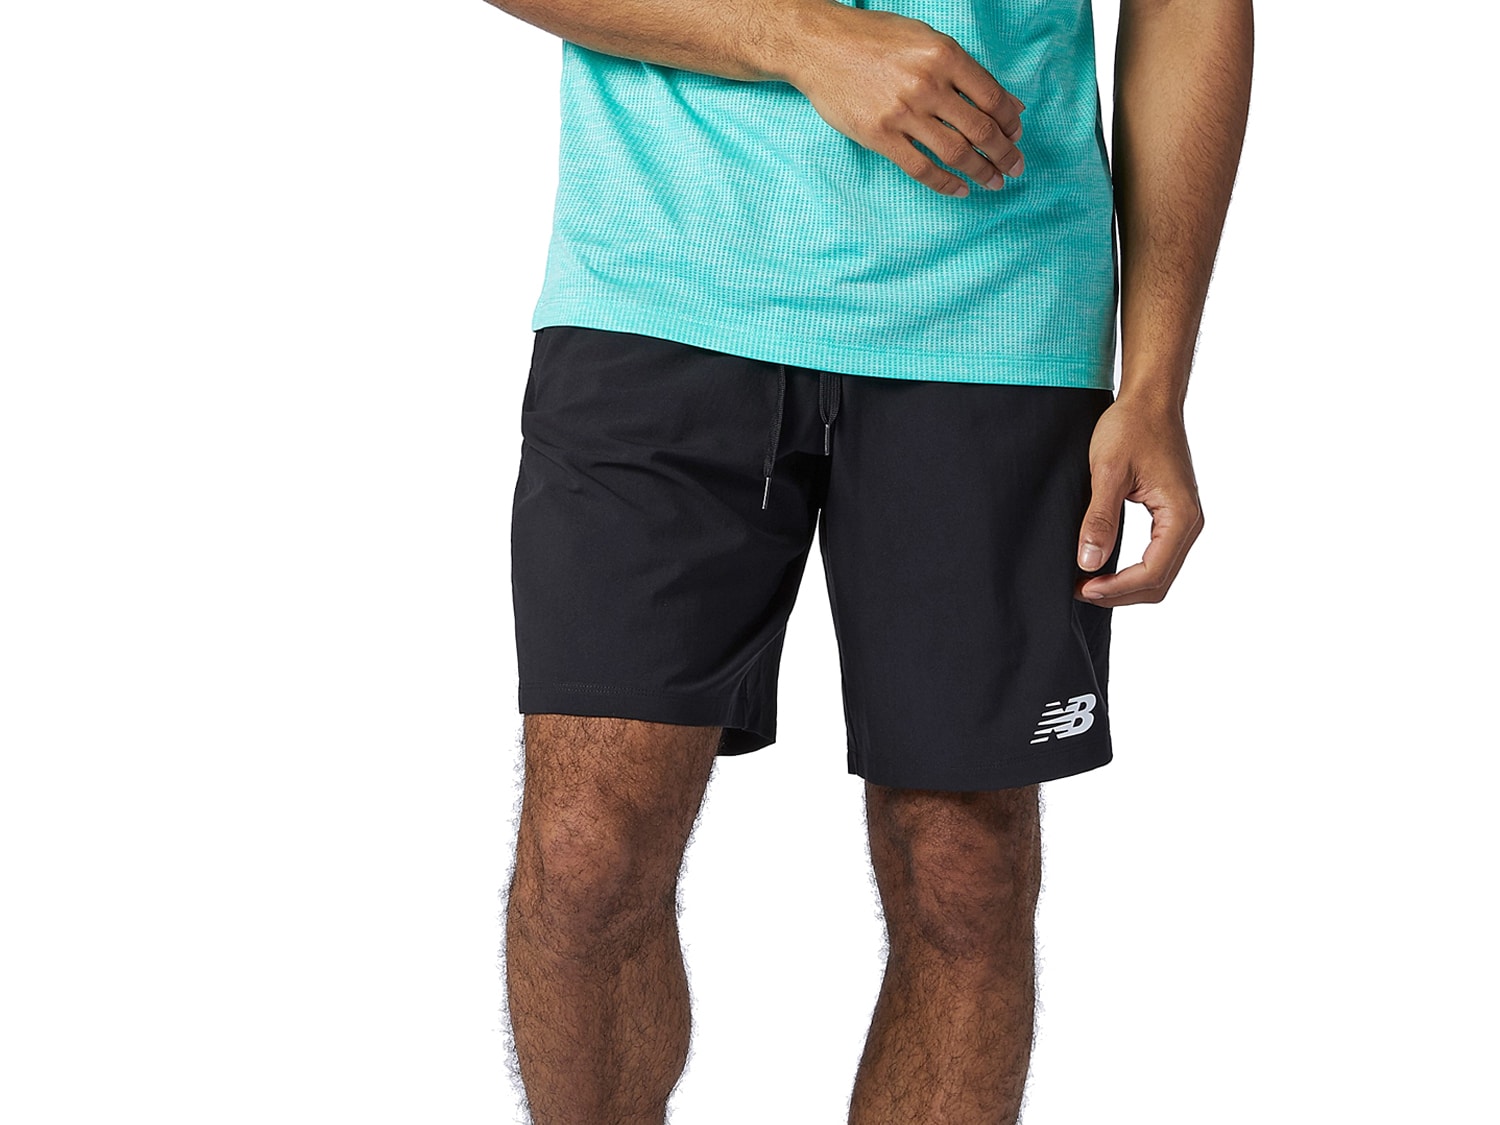 New Balance Tenacity Men's Shorts - Free Shipping | DSW